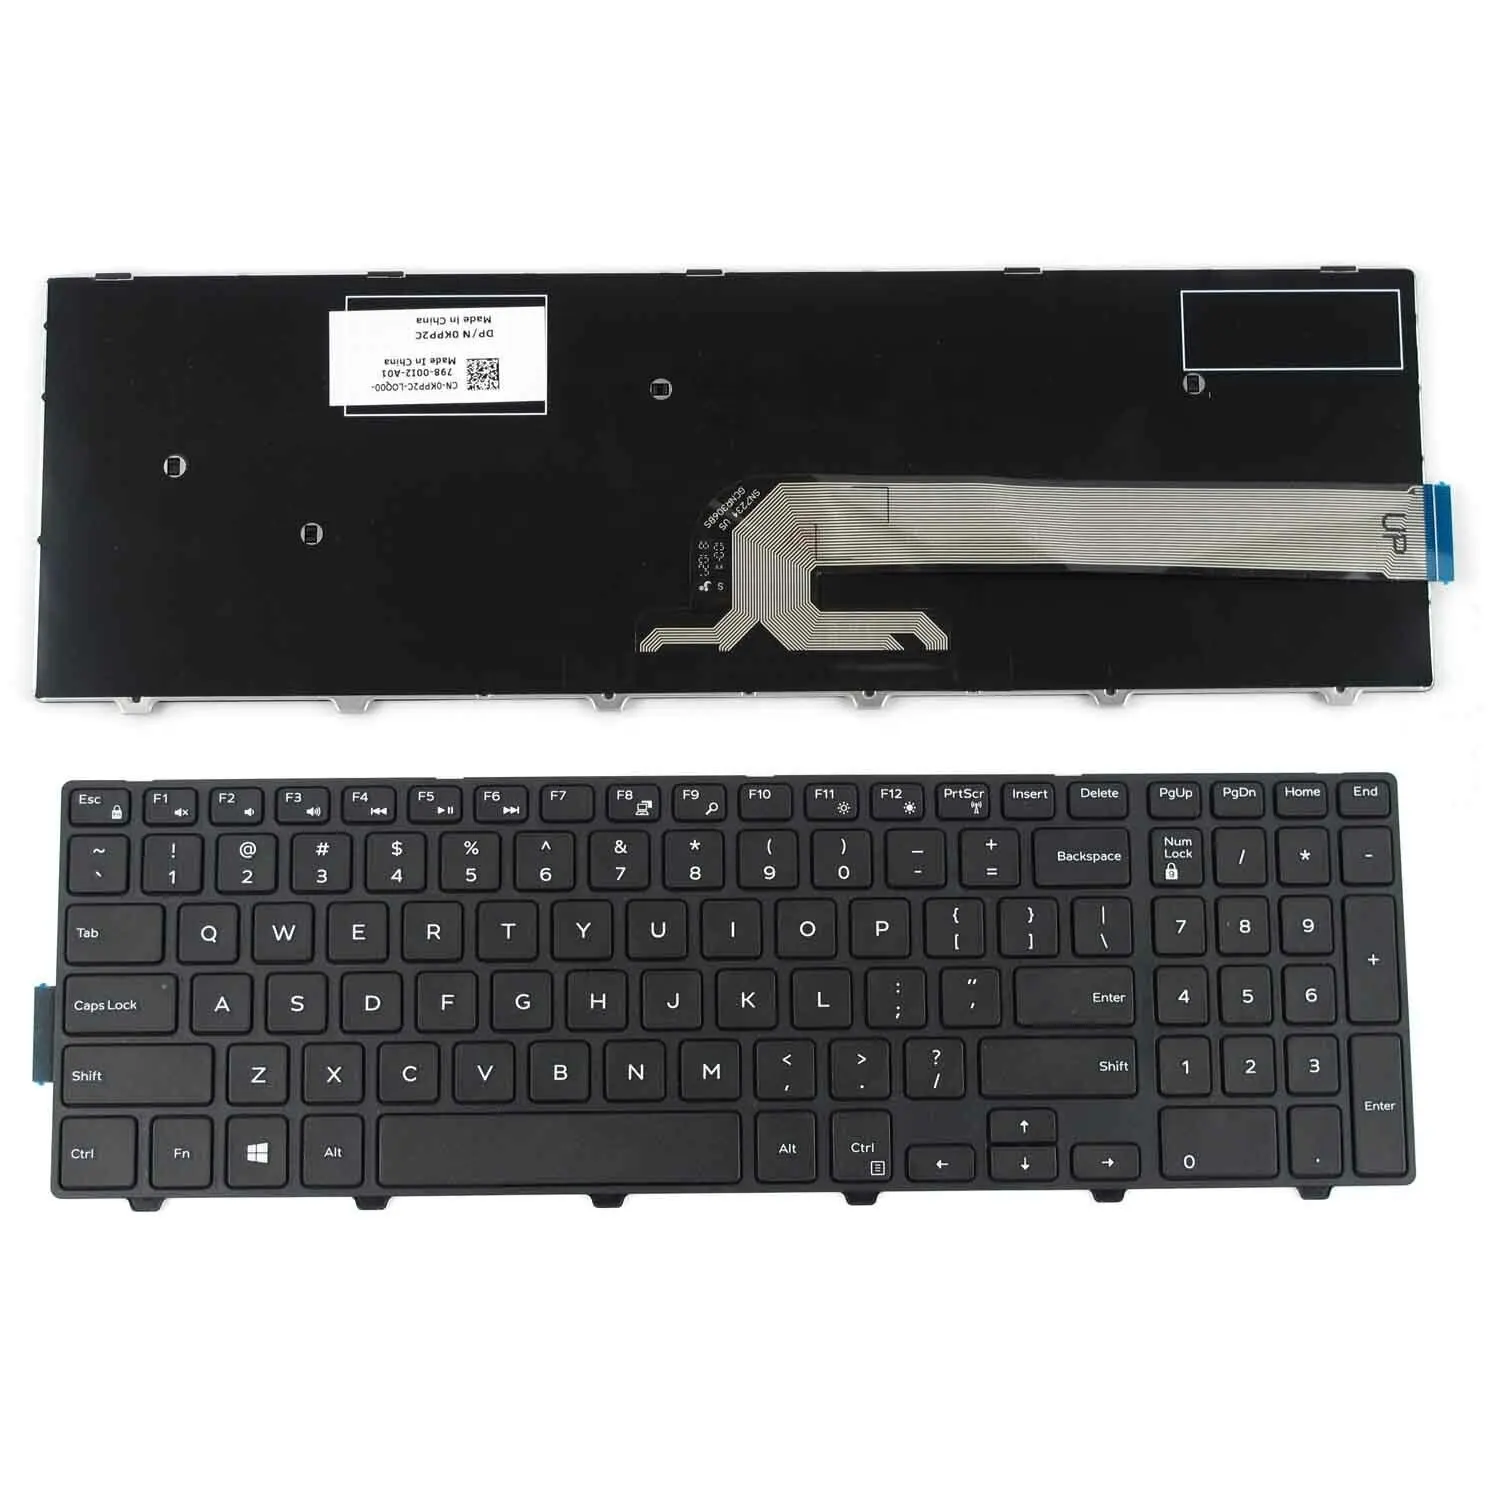 Keyboard Laptop AS baru UNTUK Dell Inspiron 15 5000 seri 5552 5557 5558 5559